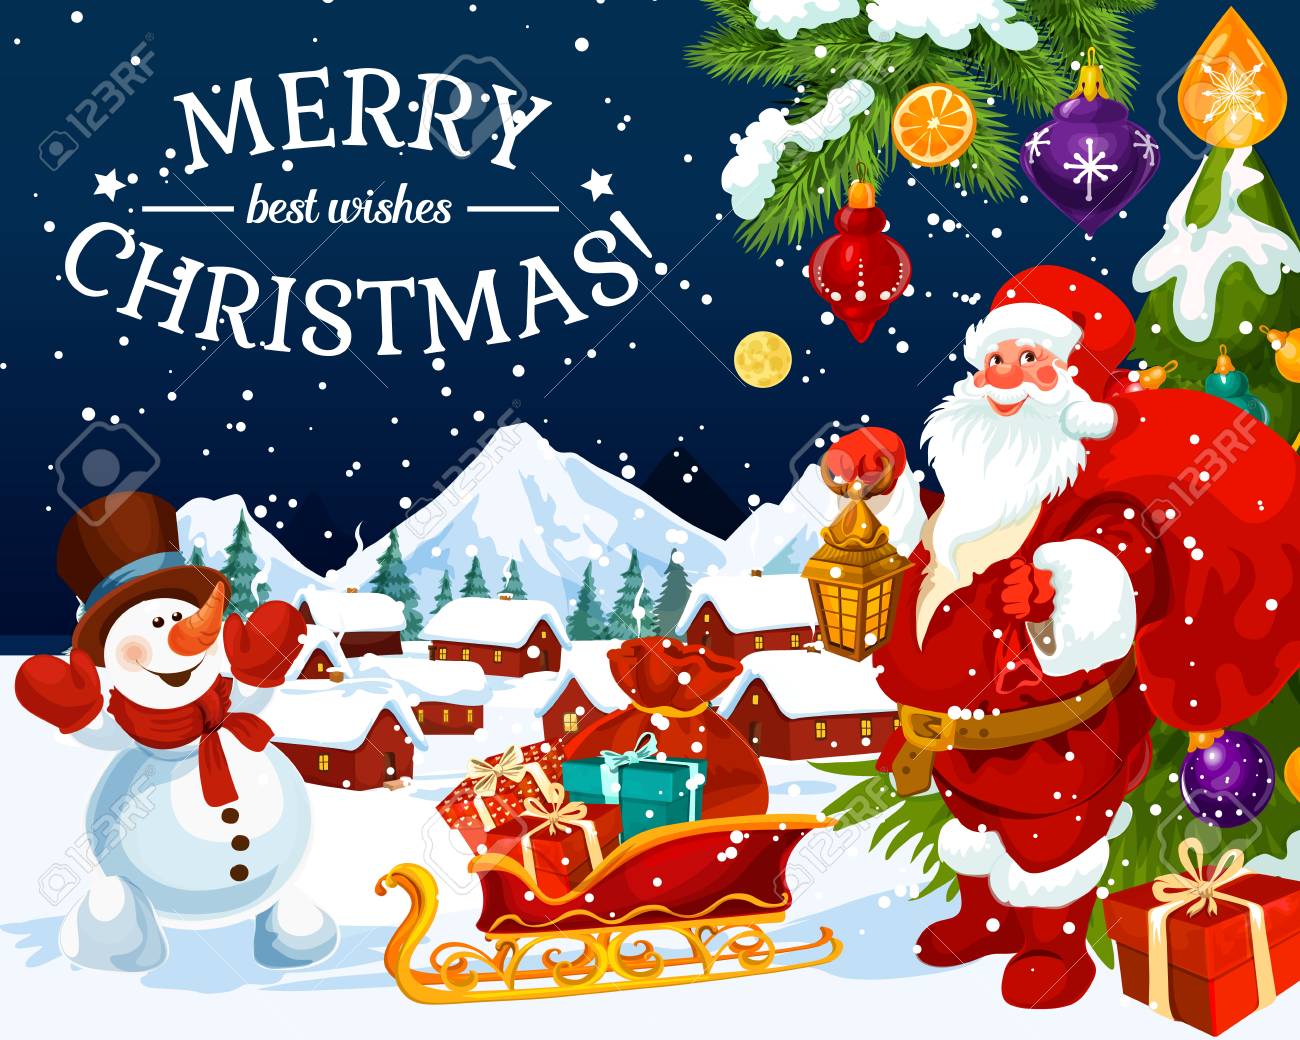 Download Merry Christmas Hughesnet Community 117856